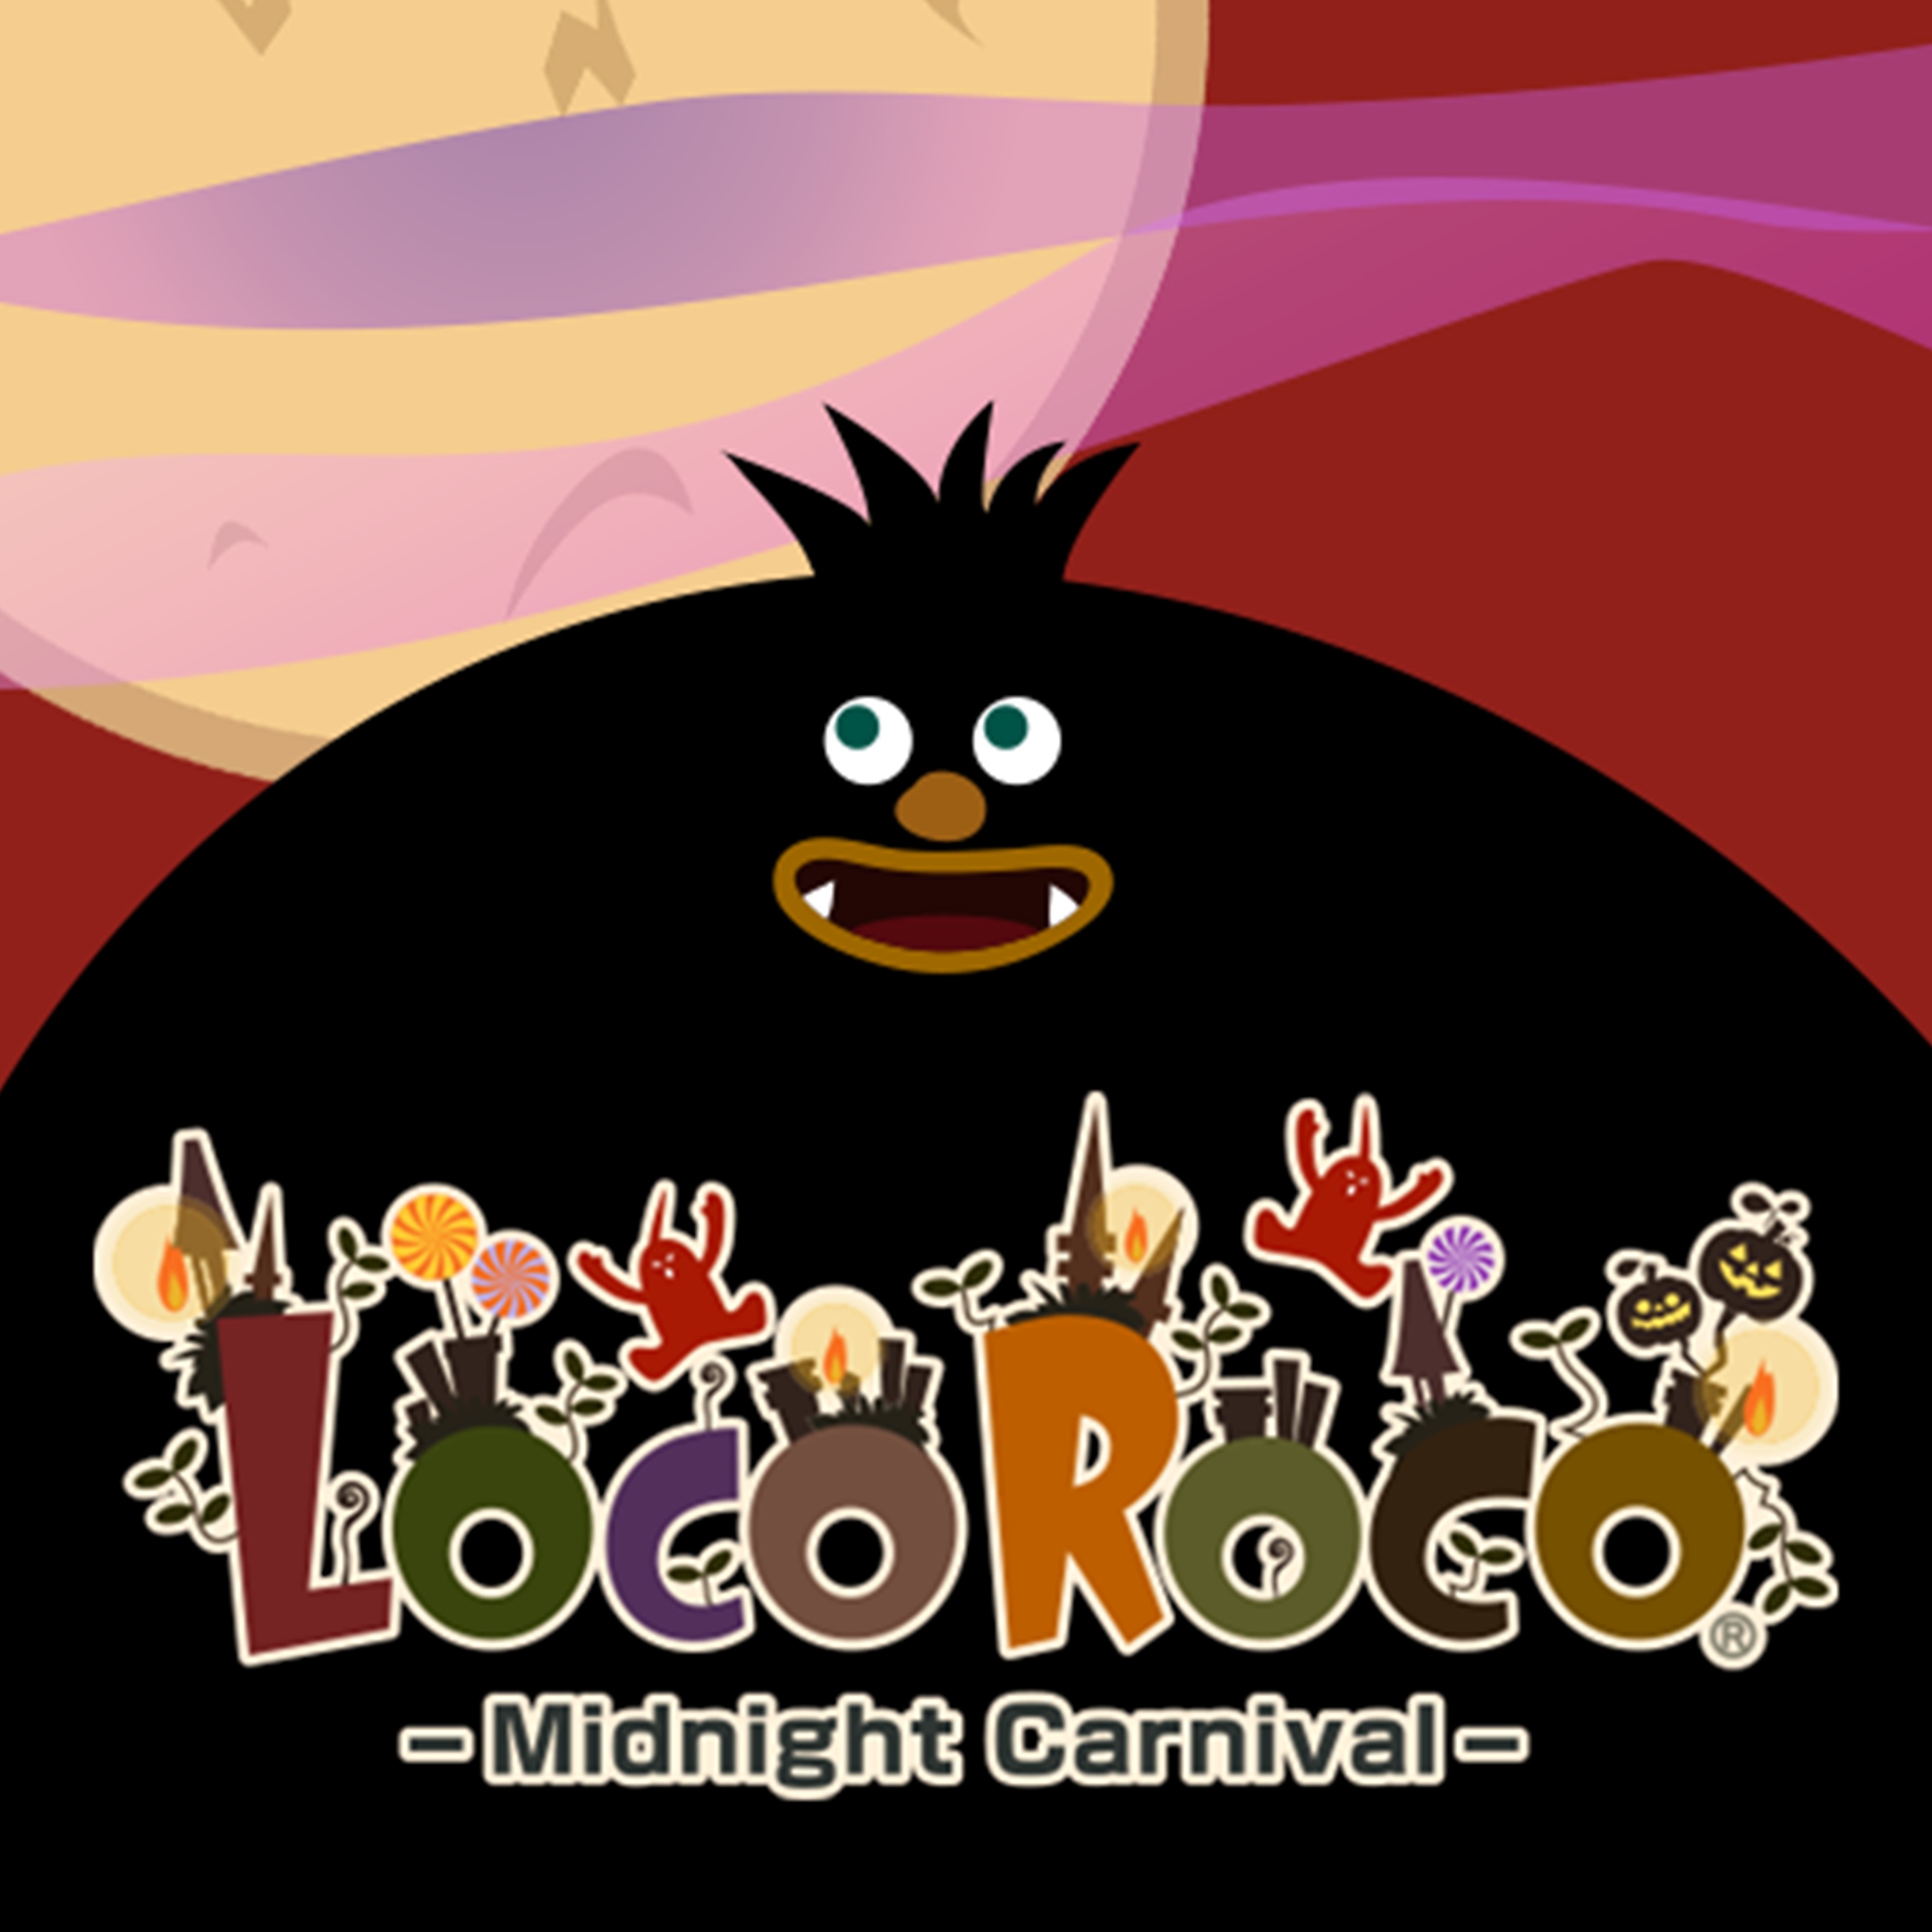 LocoRoco Midnight carnival art showing big black cartoon figure